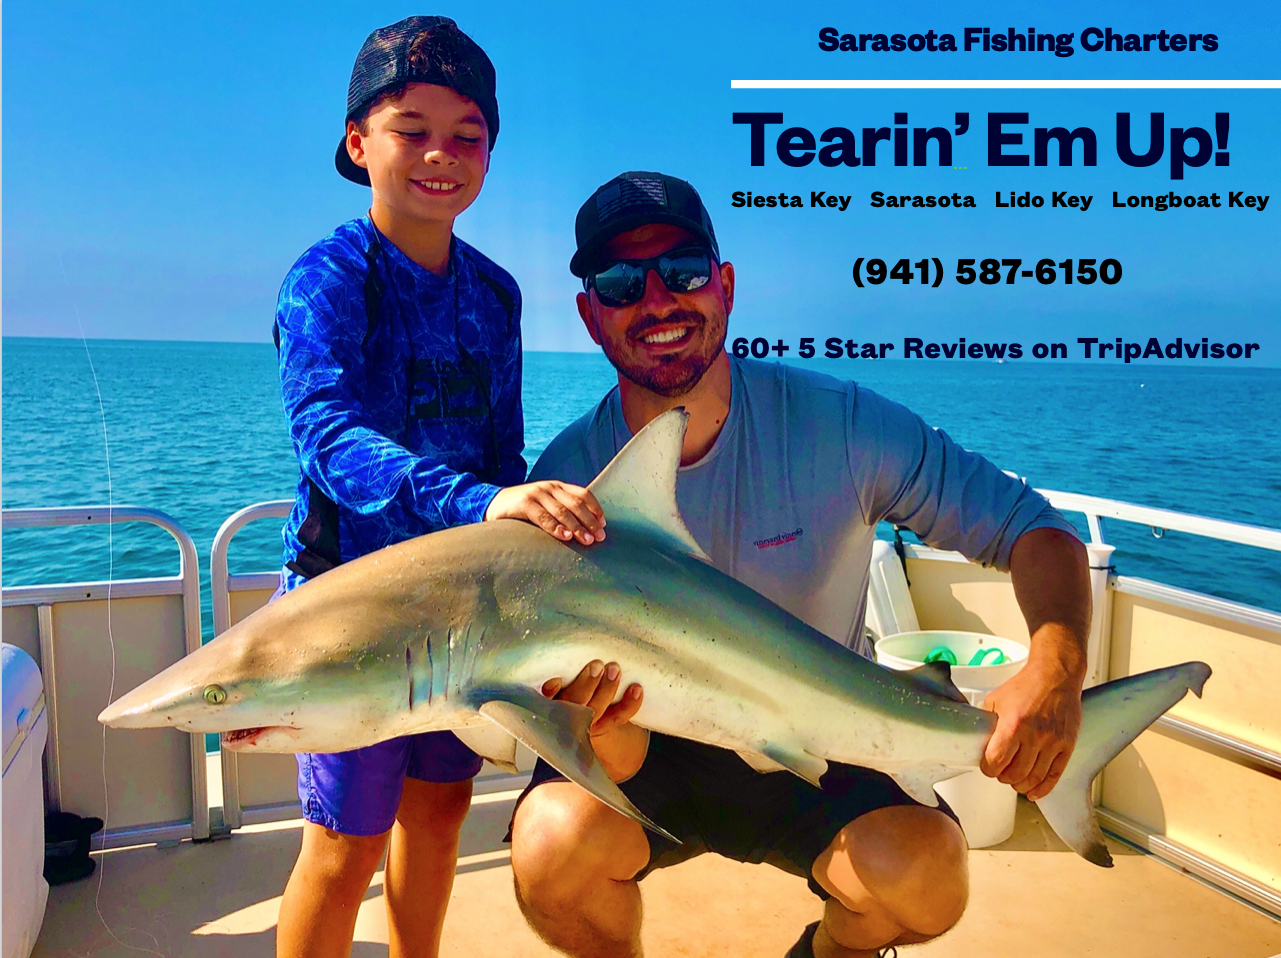 Tearin' Em Up! Family Fishing Sarasota (941) 587-6150 SHARKS.png